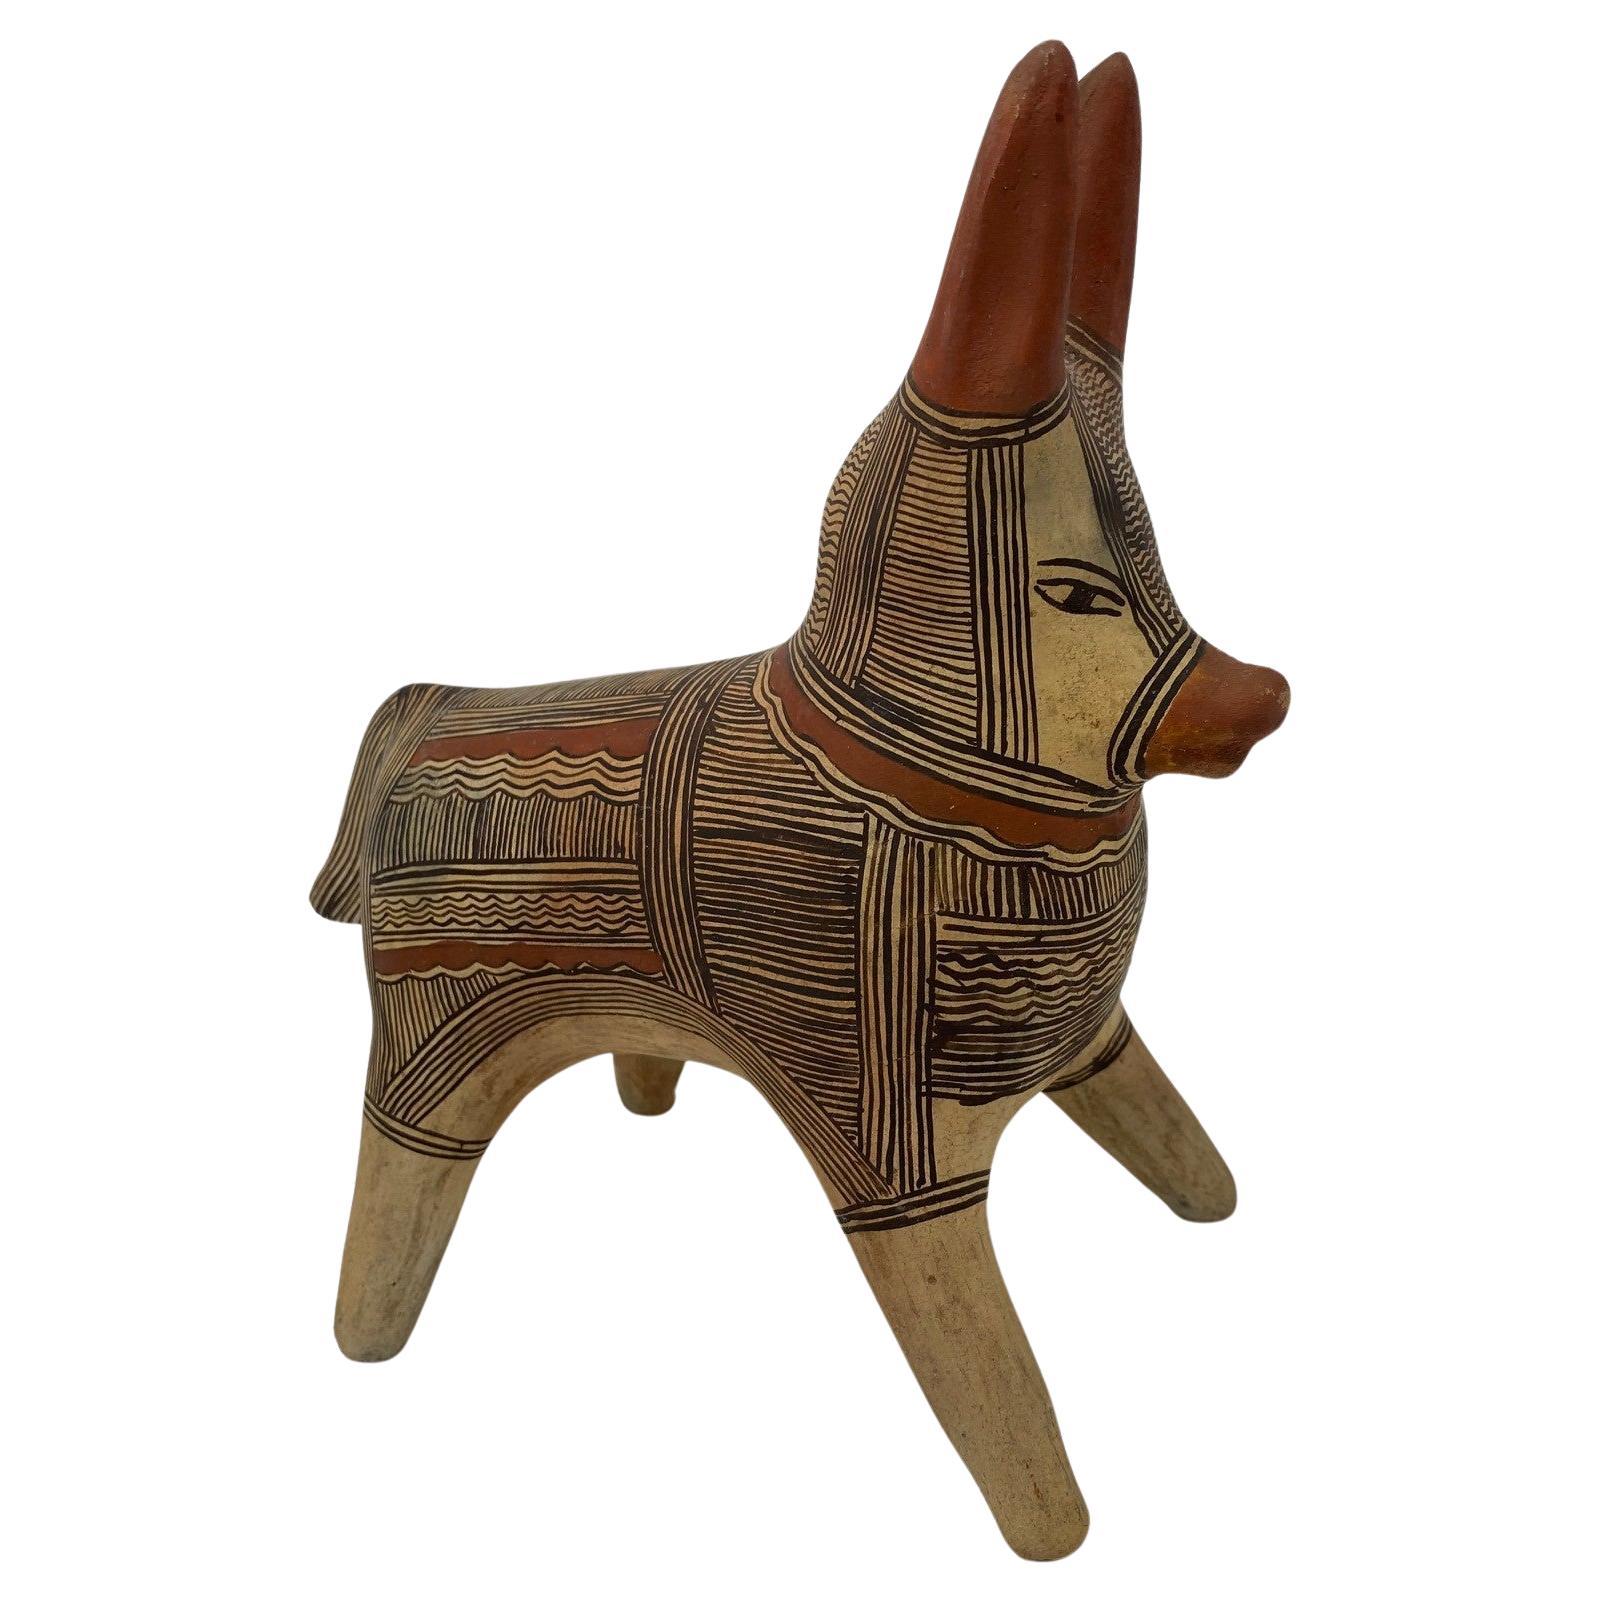 Vintage 1960s Mexican Folk Art Pottery Donkey Sculpture For Sale